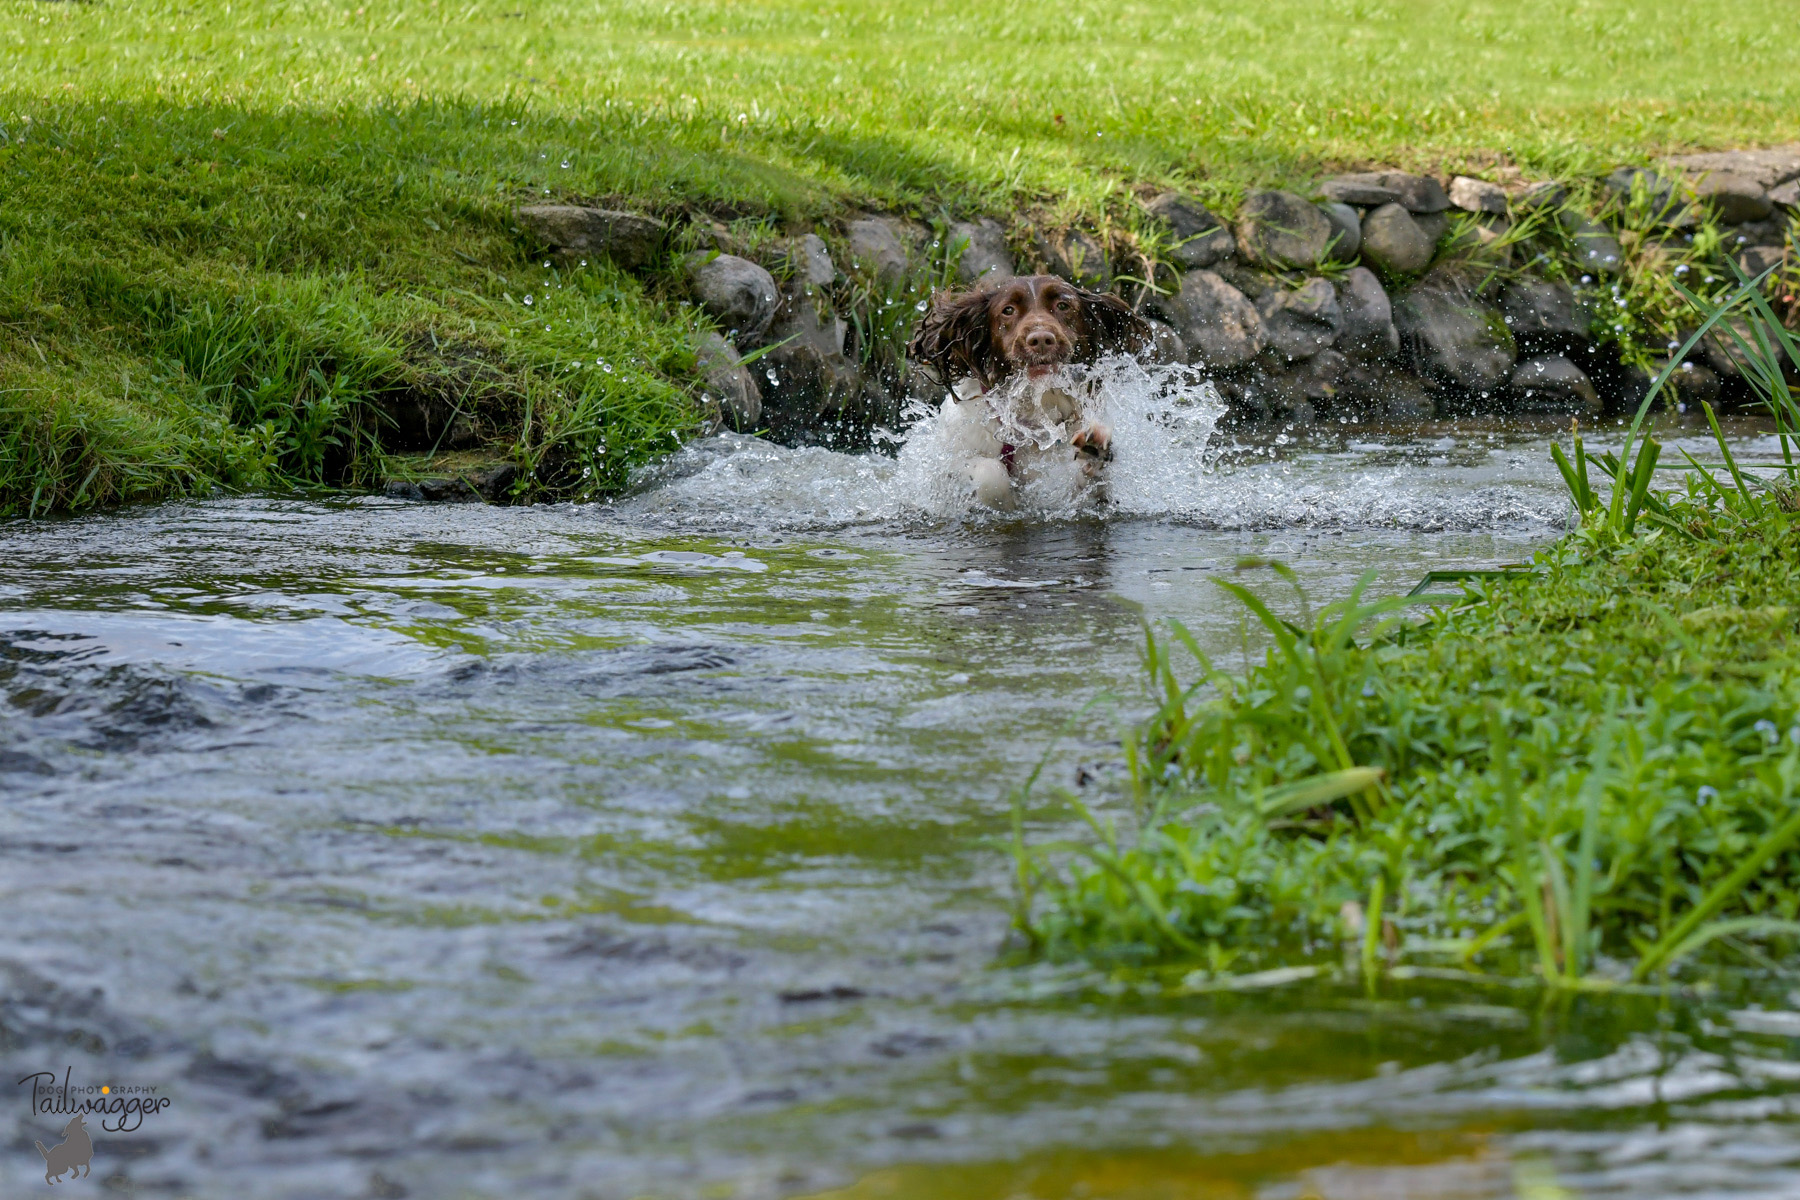 English Springer Spaniel jumping through the stream at McCourtie Park.